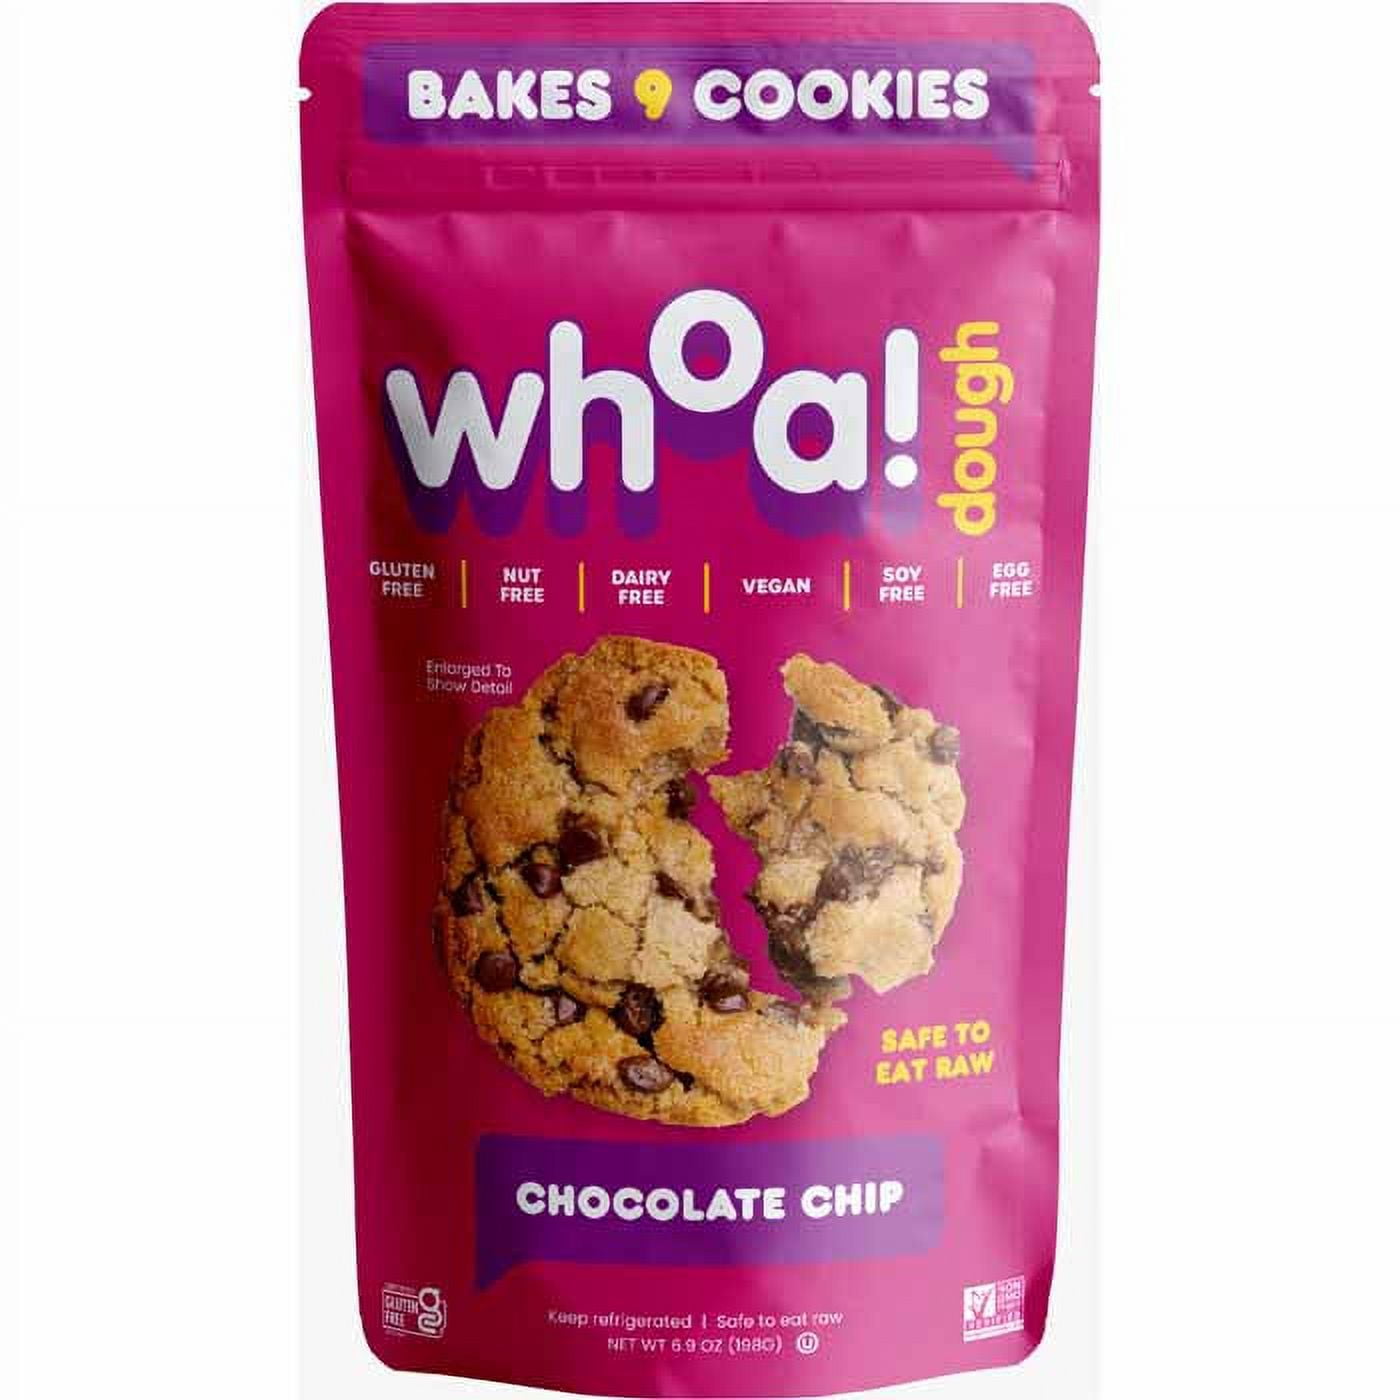 NE Ohio-based Whoa Dough 1 of 9 companies selected for special